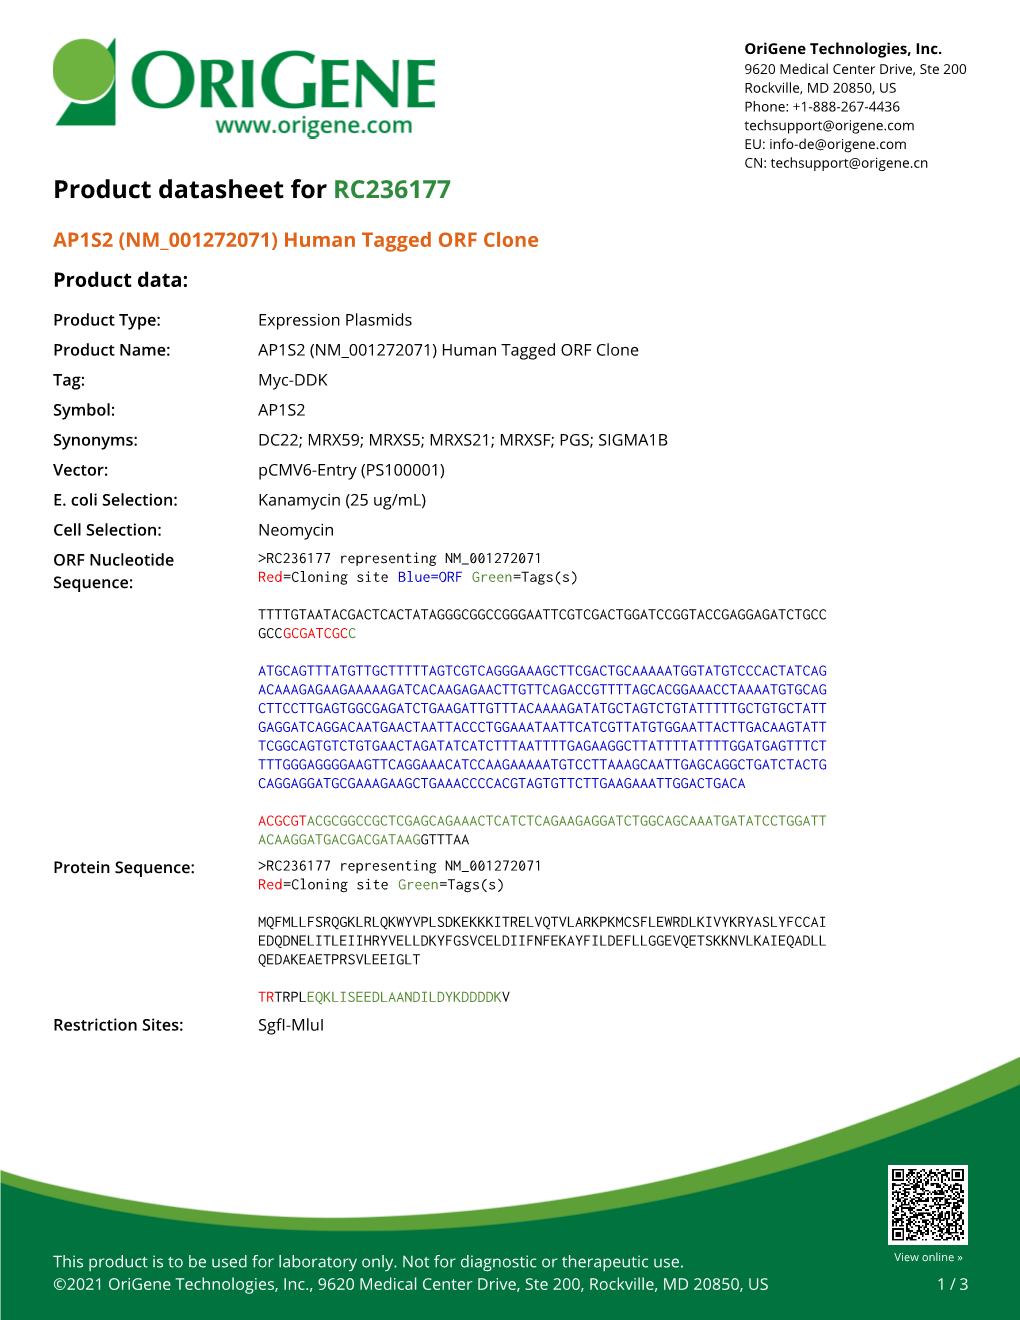 AP1S2 (NM 001272071) Human Tagged ORF Clone – RC236177 | Origene